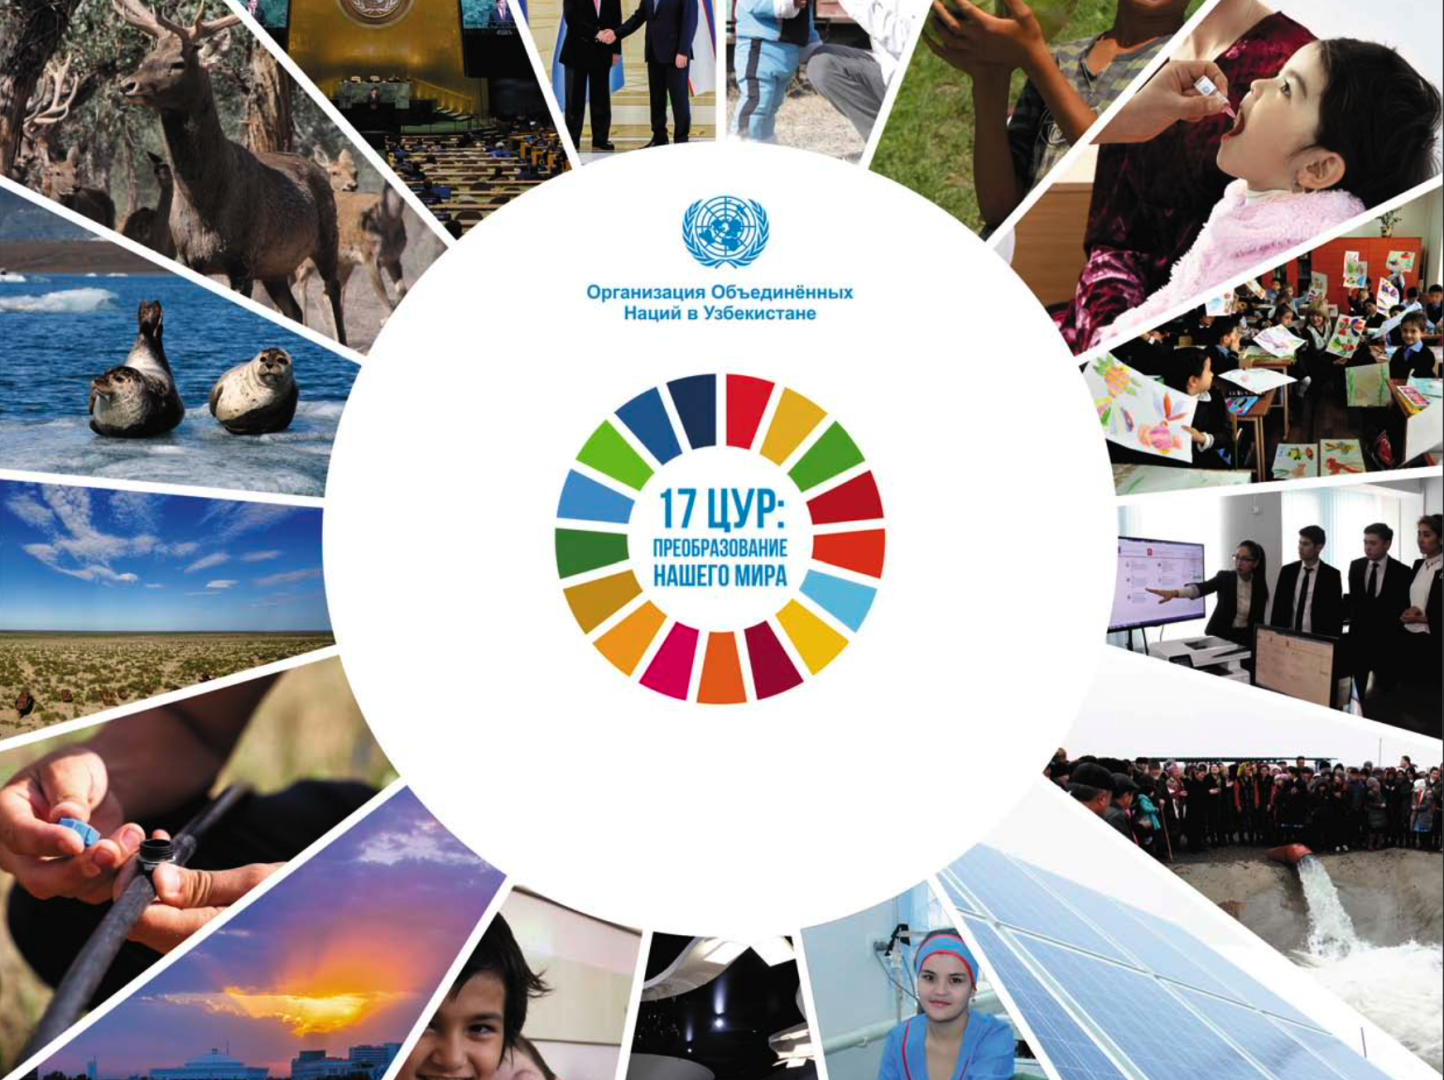 Цели оон 2015. Цели устойчивого развития. Цели устойчивого развития ООН 2015-2030. Цели устойчивого развития ООН. 17 Целей устойчивого развития.